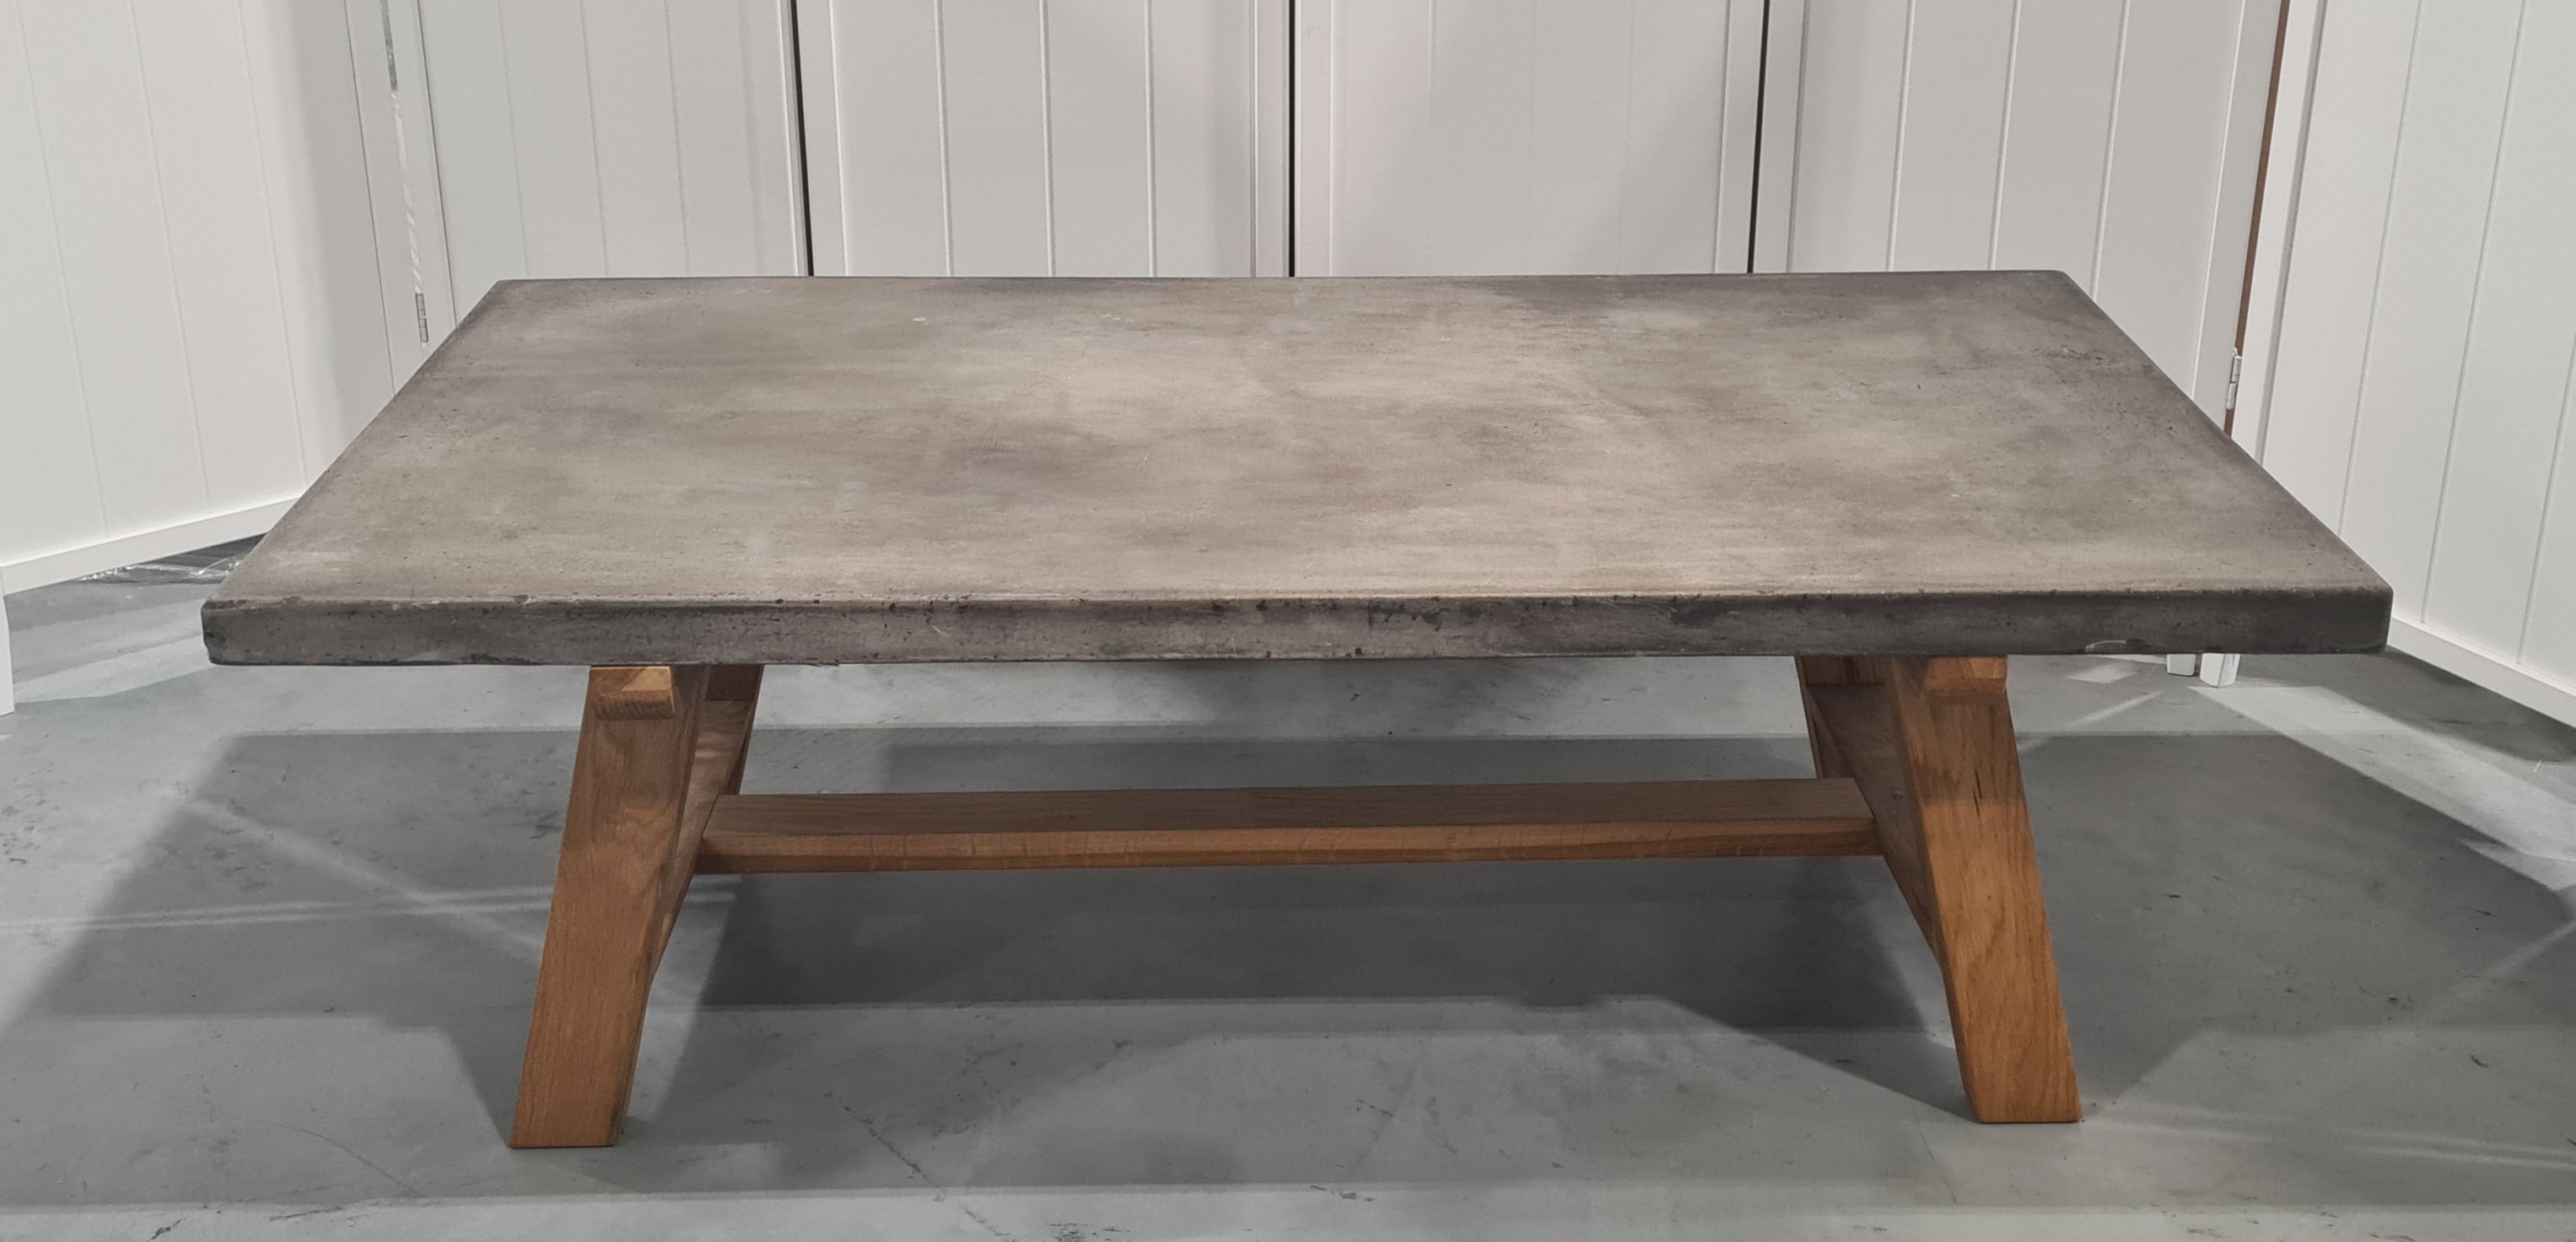 Modern Polished Concrete Coffee Table - $13 / week (6 week hire)